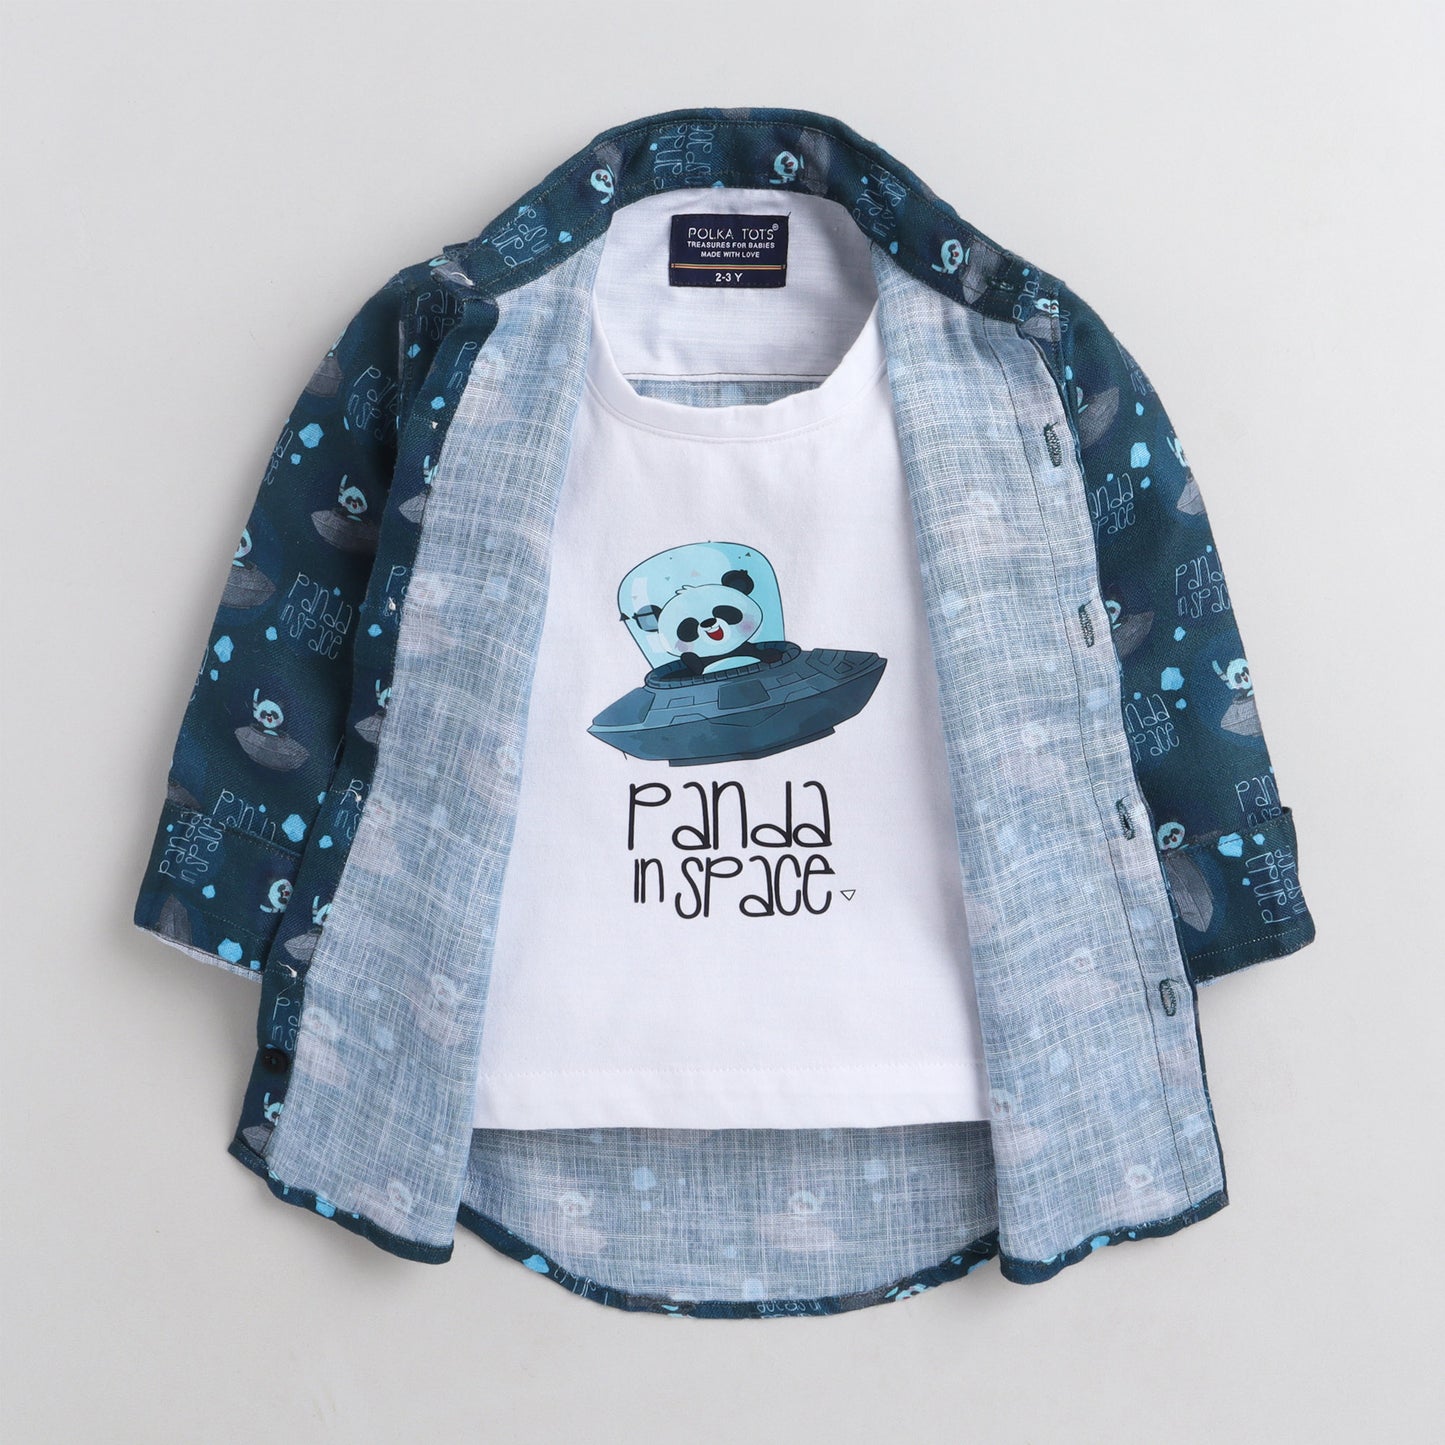 Polka Tots Panda in space Tshirt shirt - Navy Blue